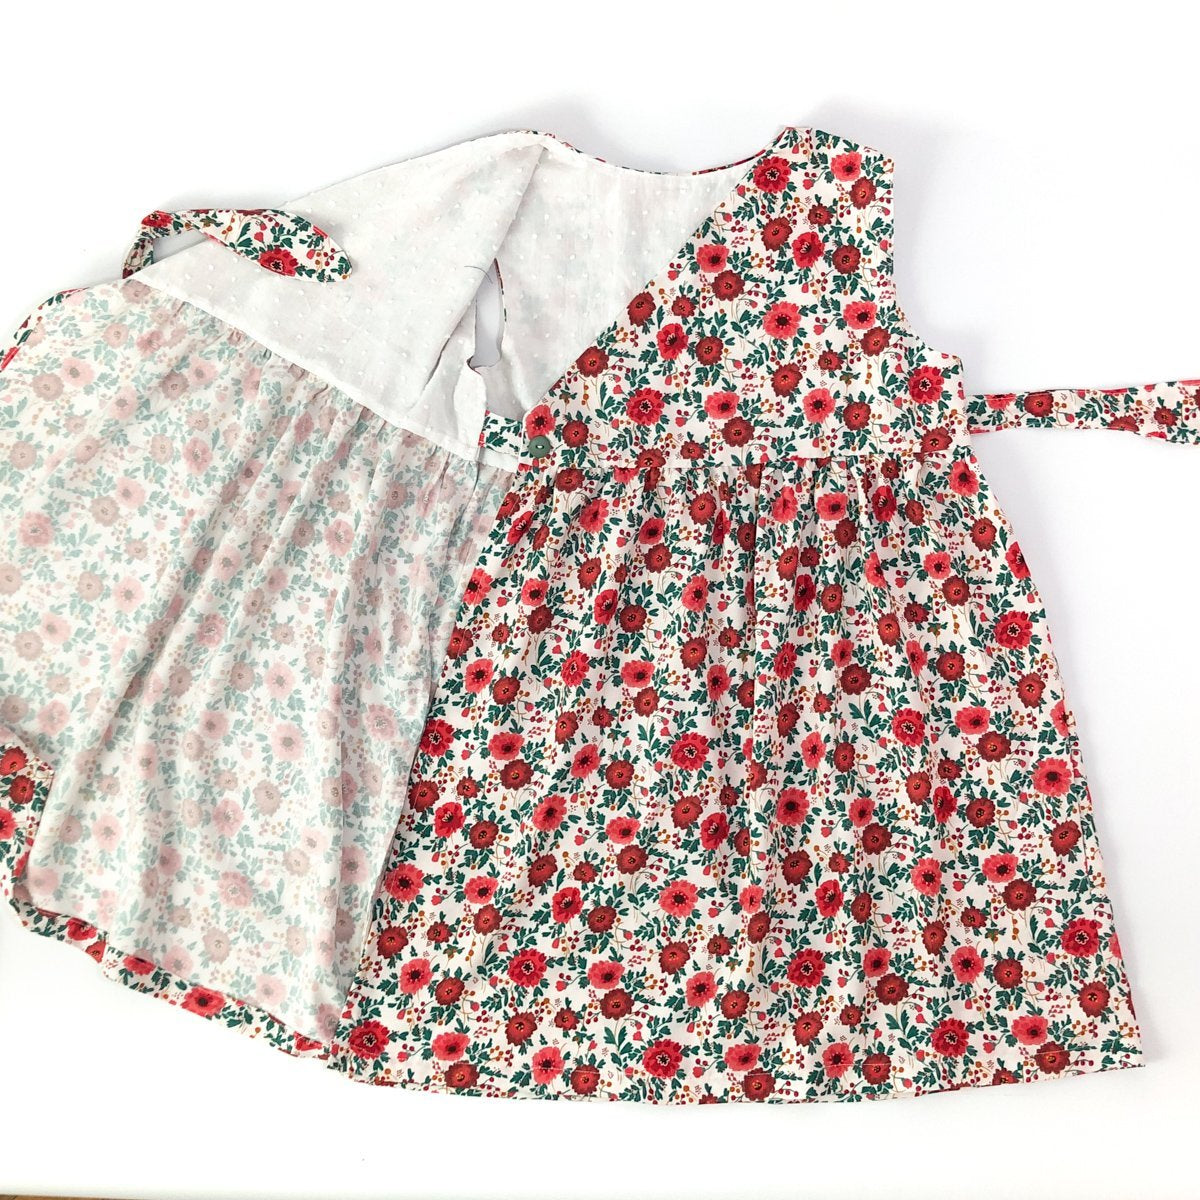 Ikatee - VIOLETTE dress - Kids 3/12Y - Paper Sewing Pattern